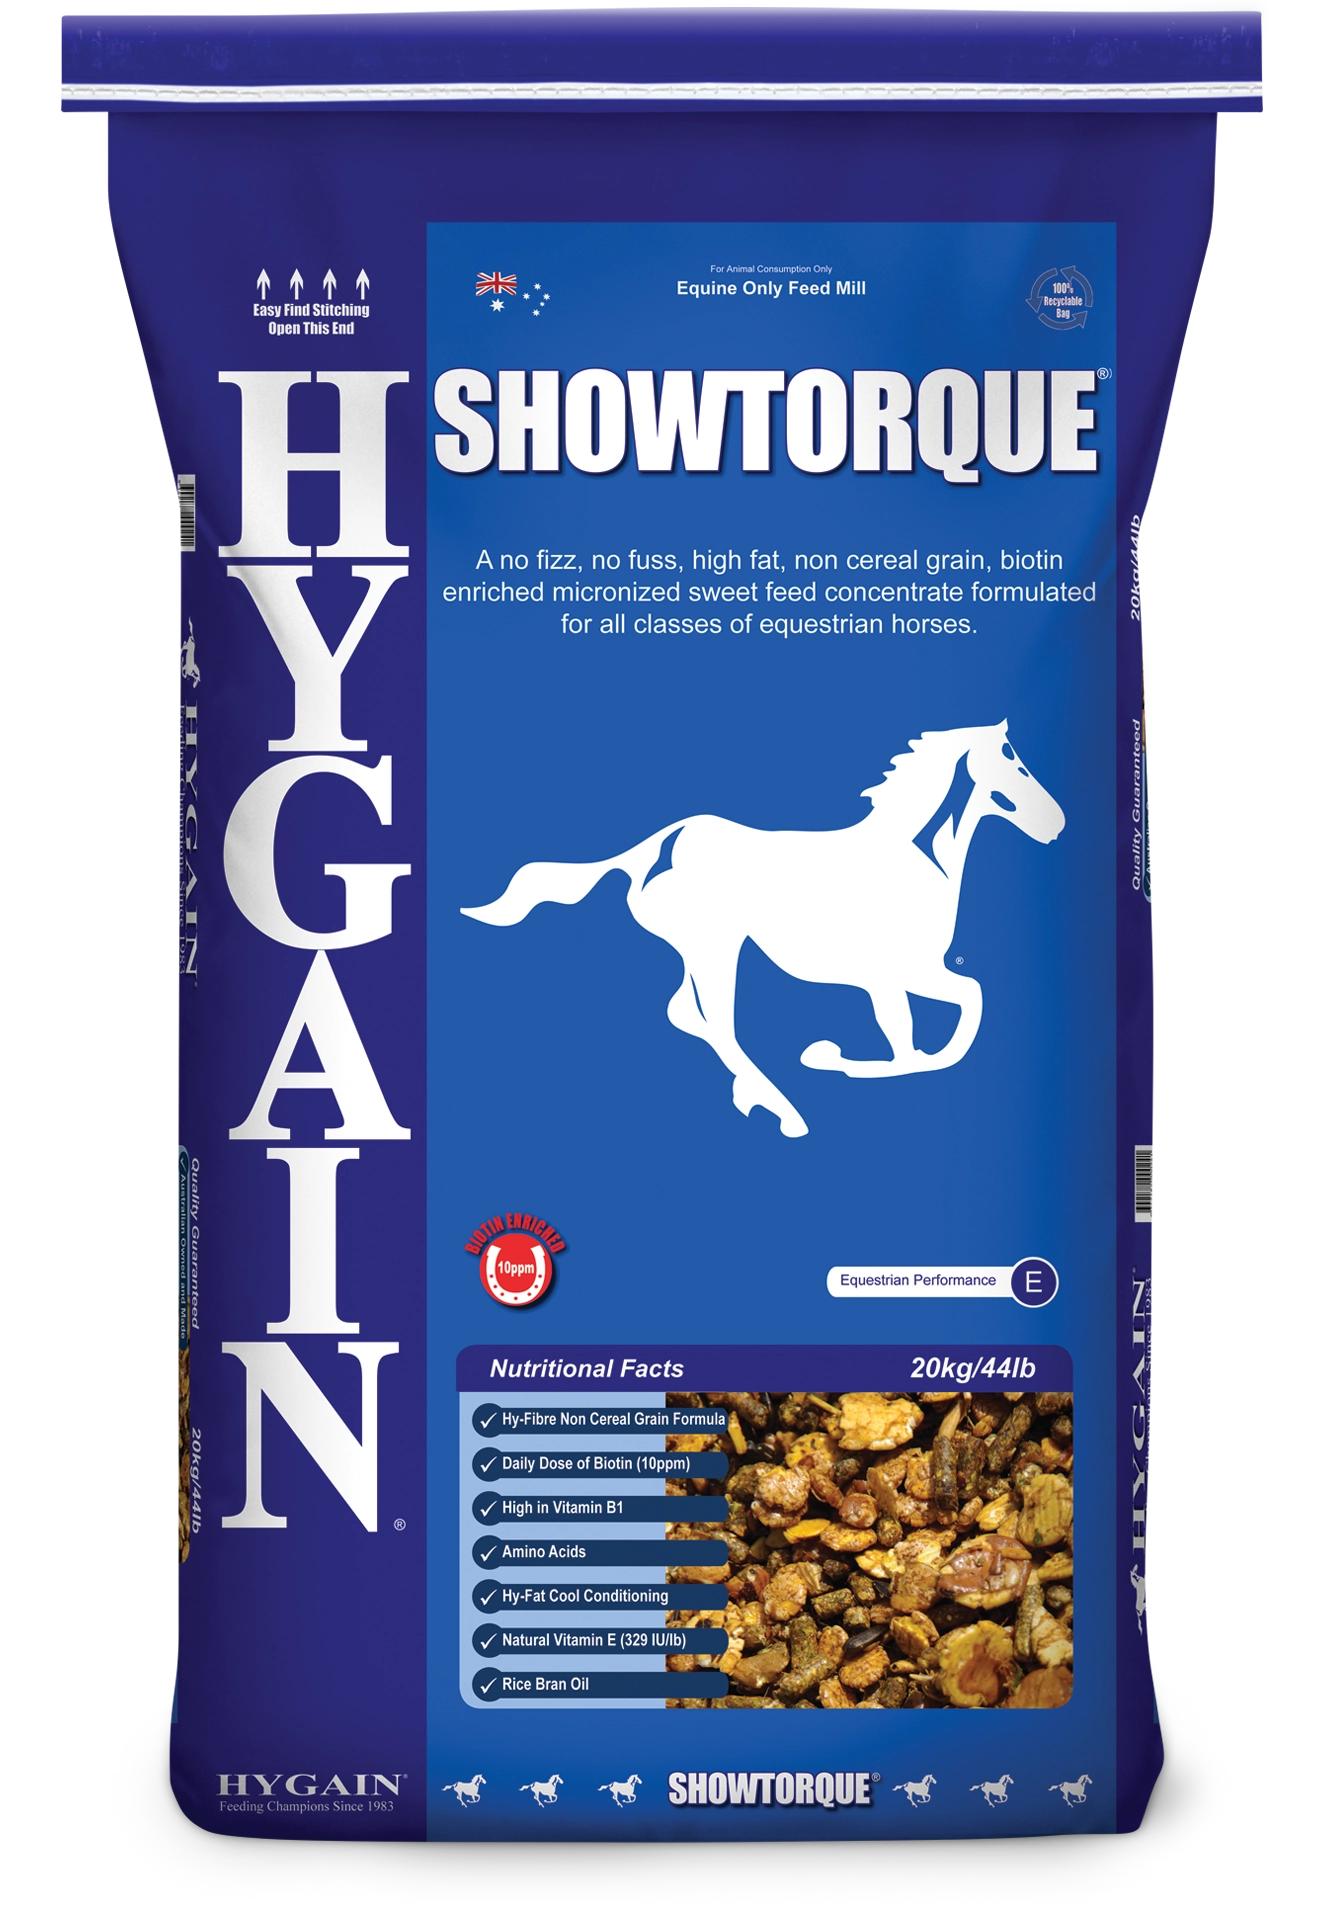 Hygain Showtorque bag